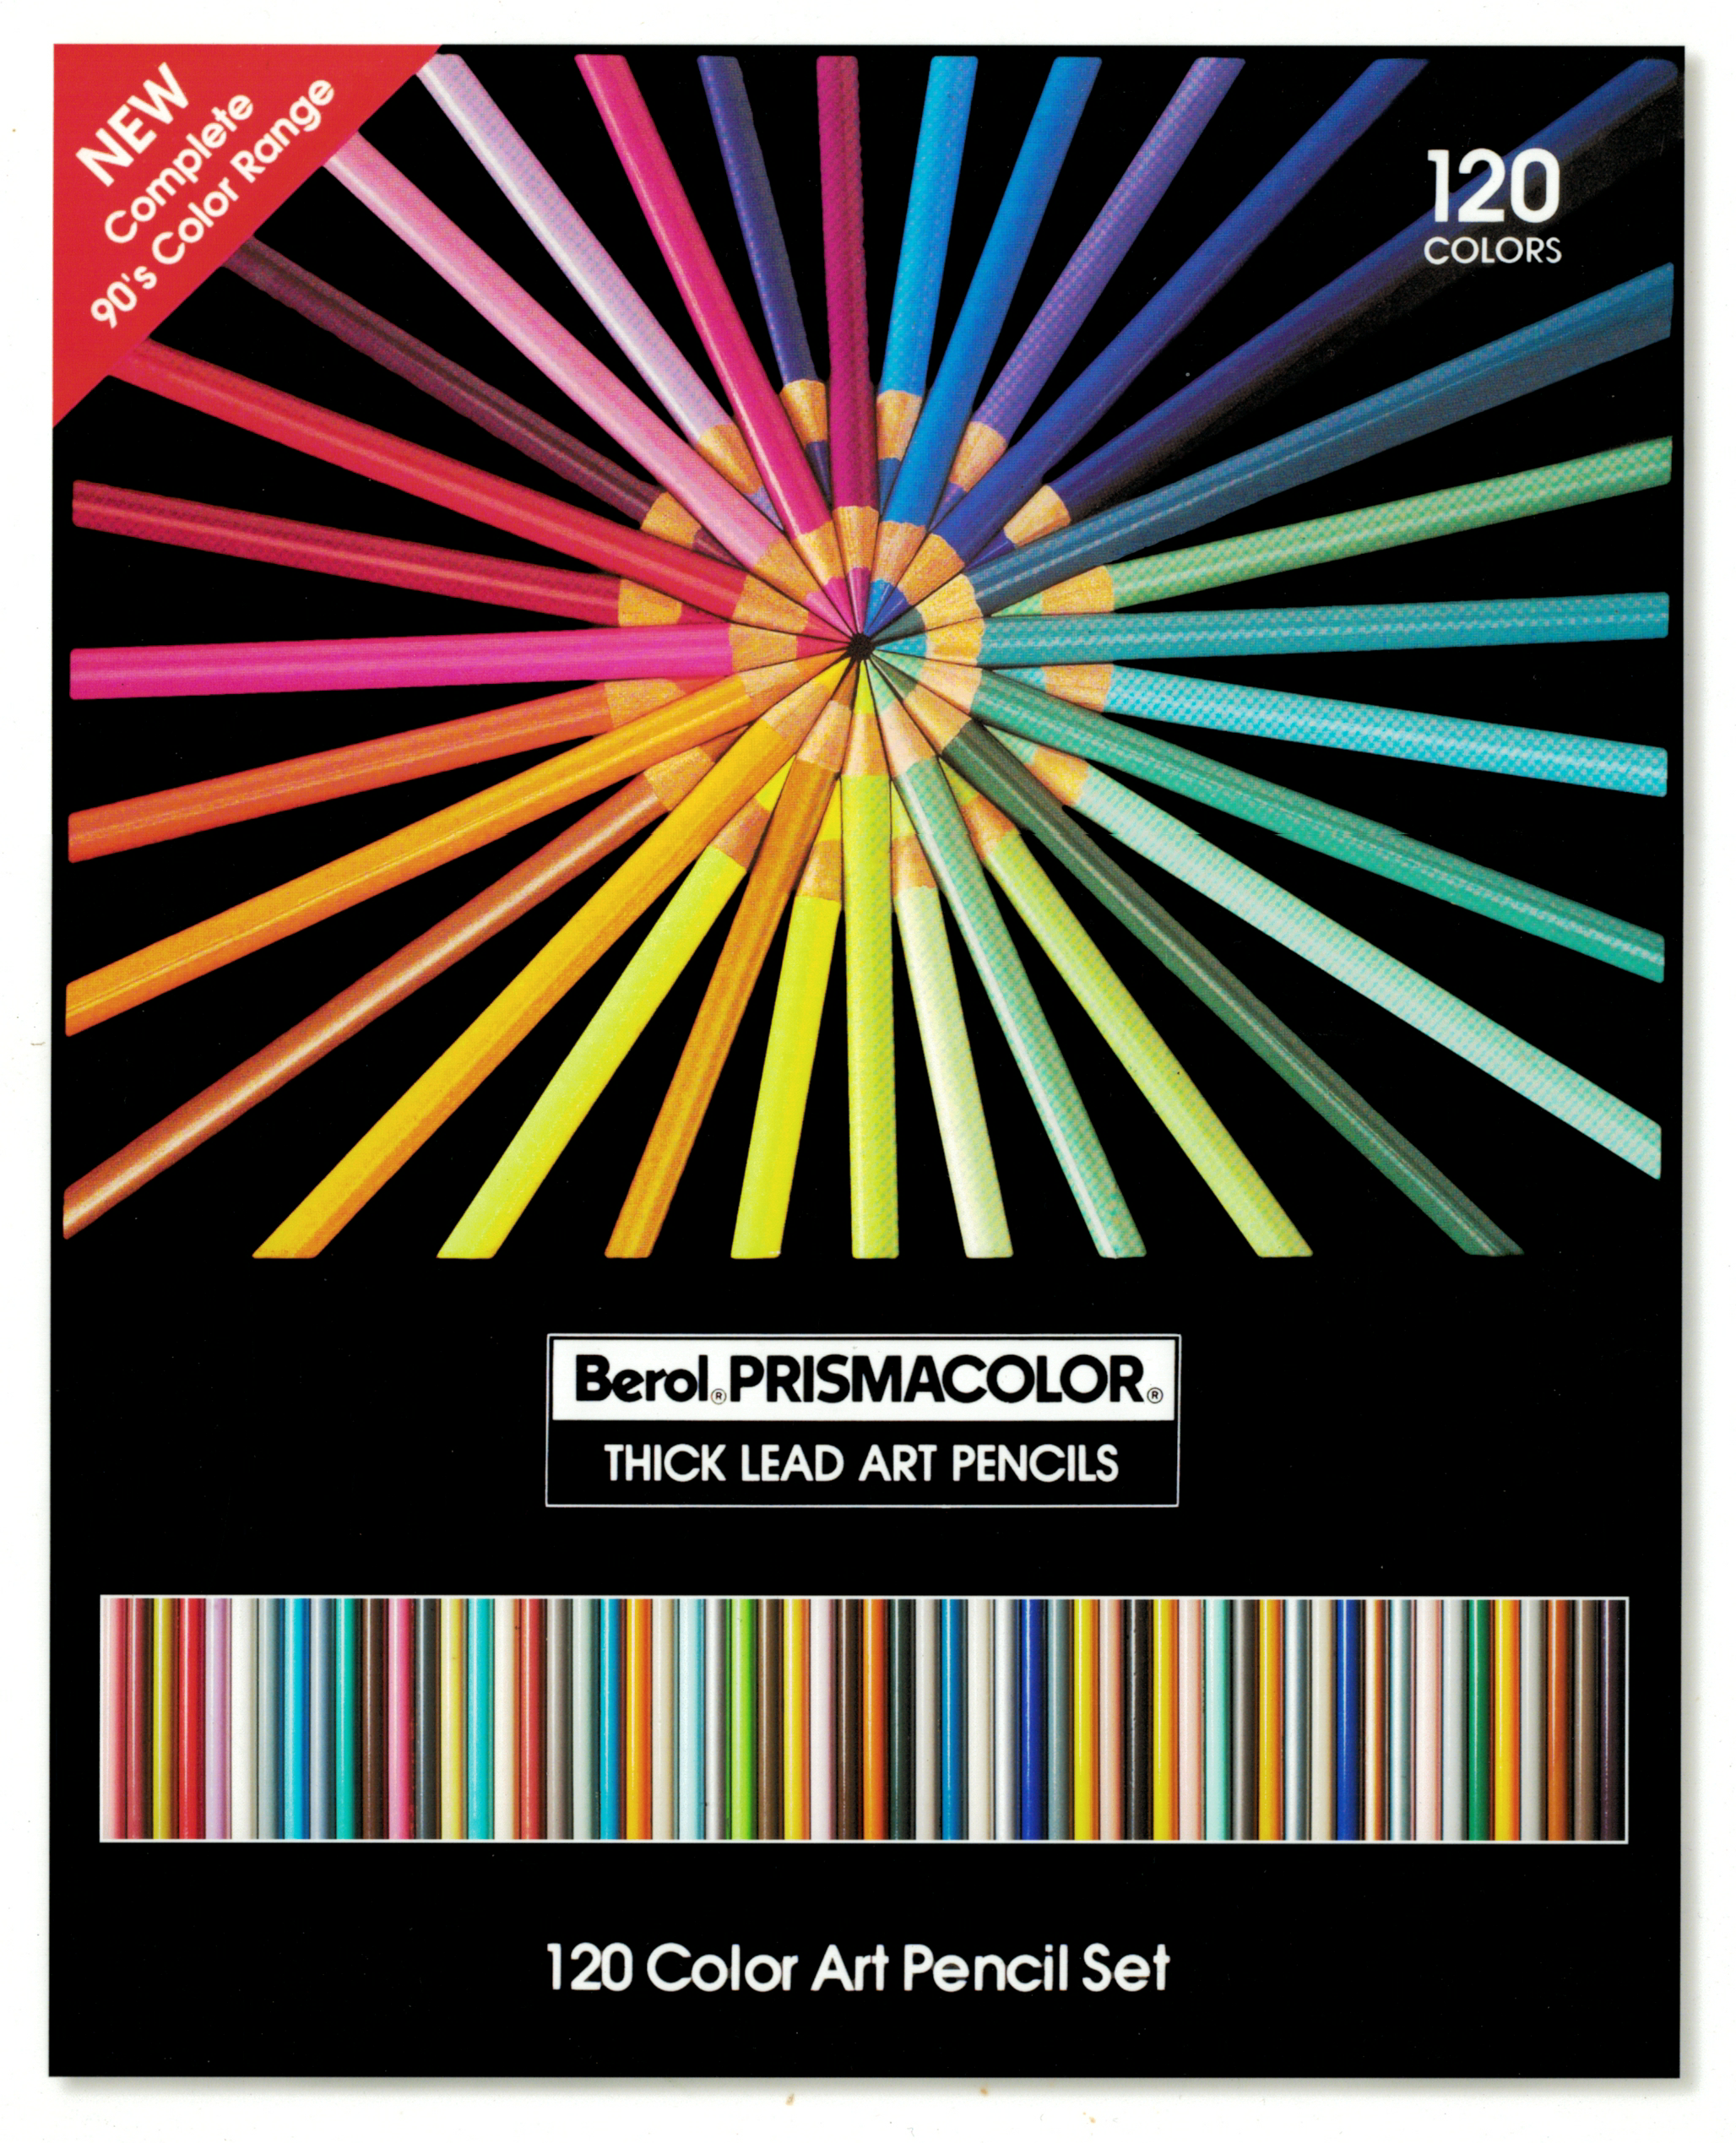 CMF for Berol Prismacolor